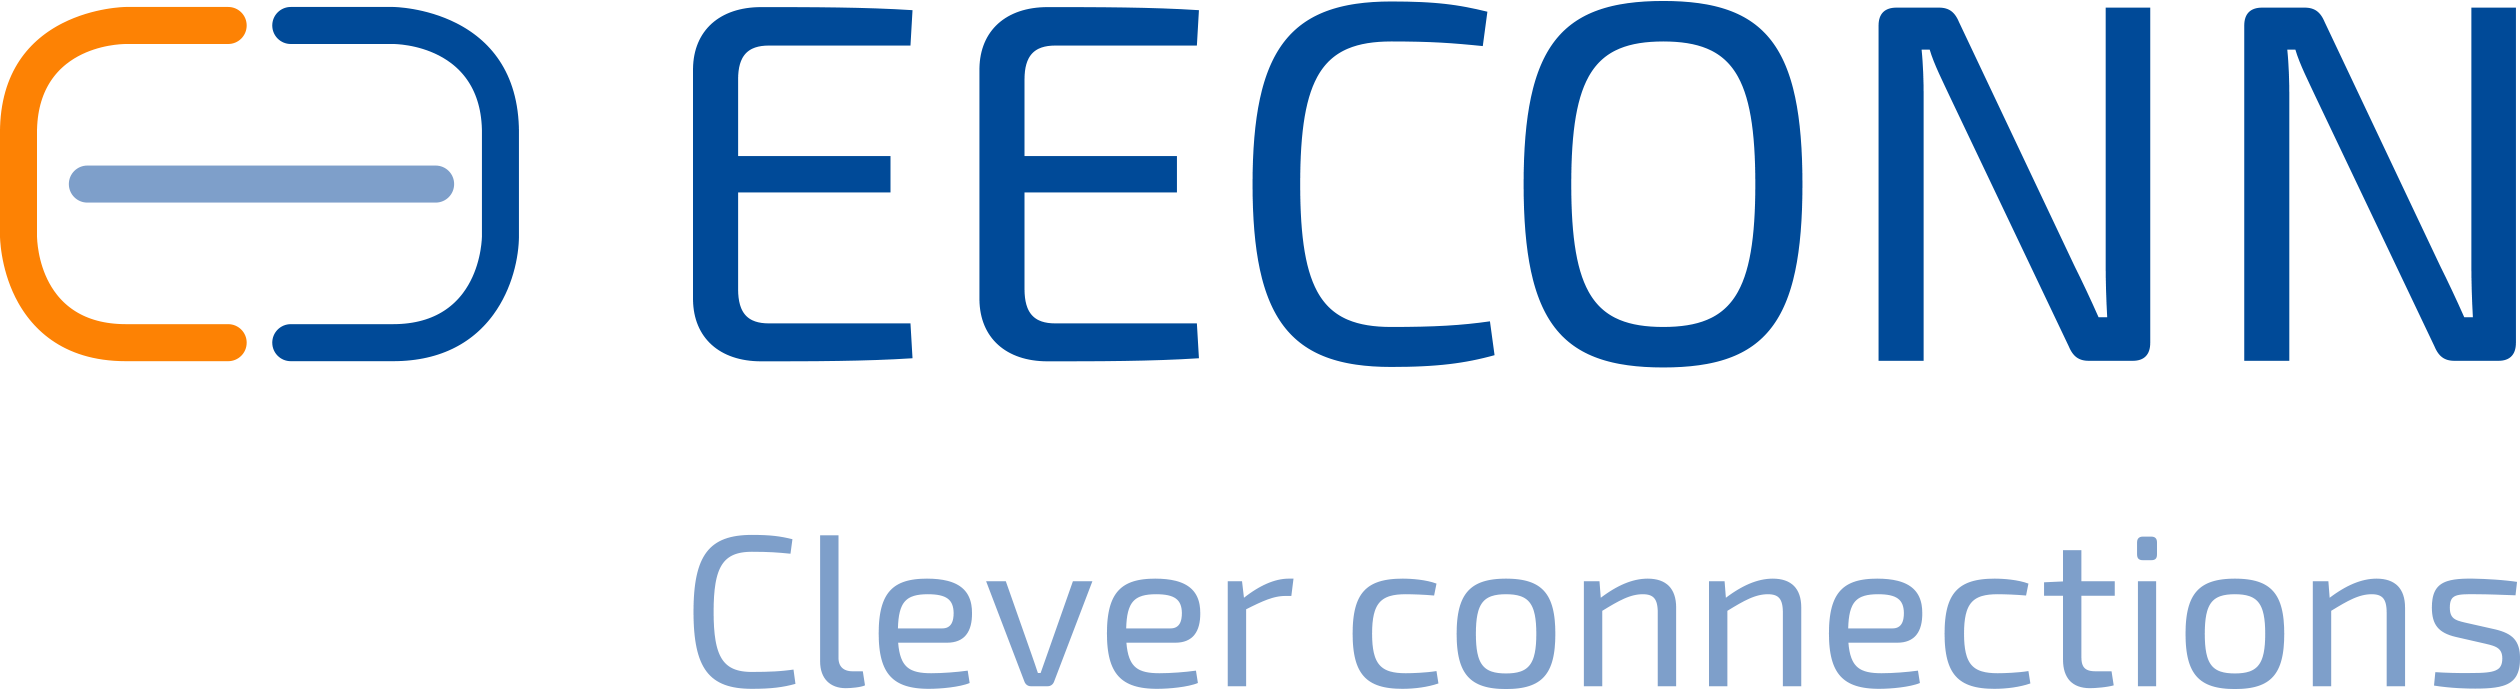 Eeconn logo payoff rgb